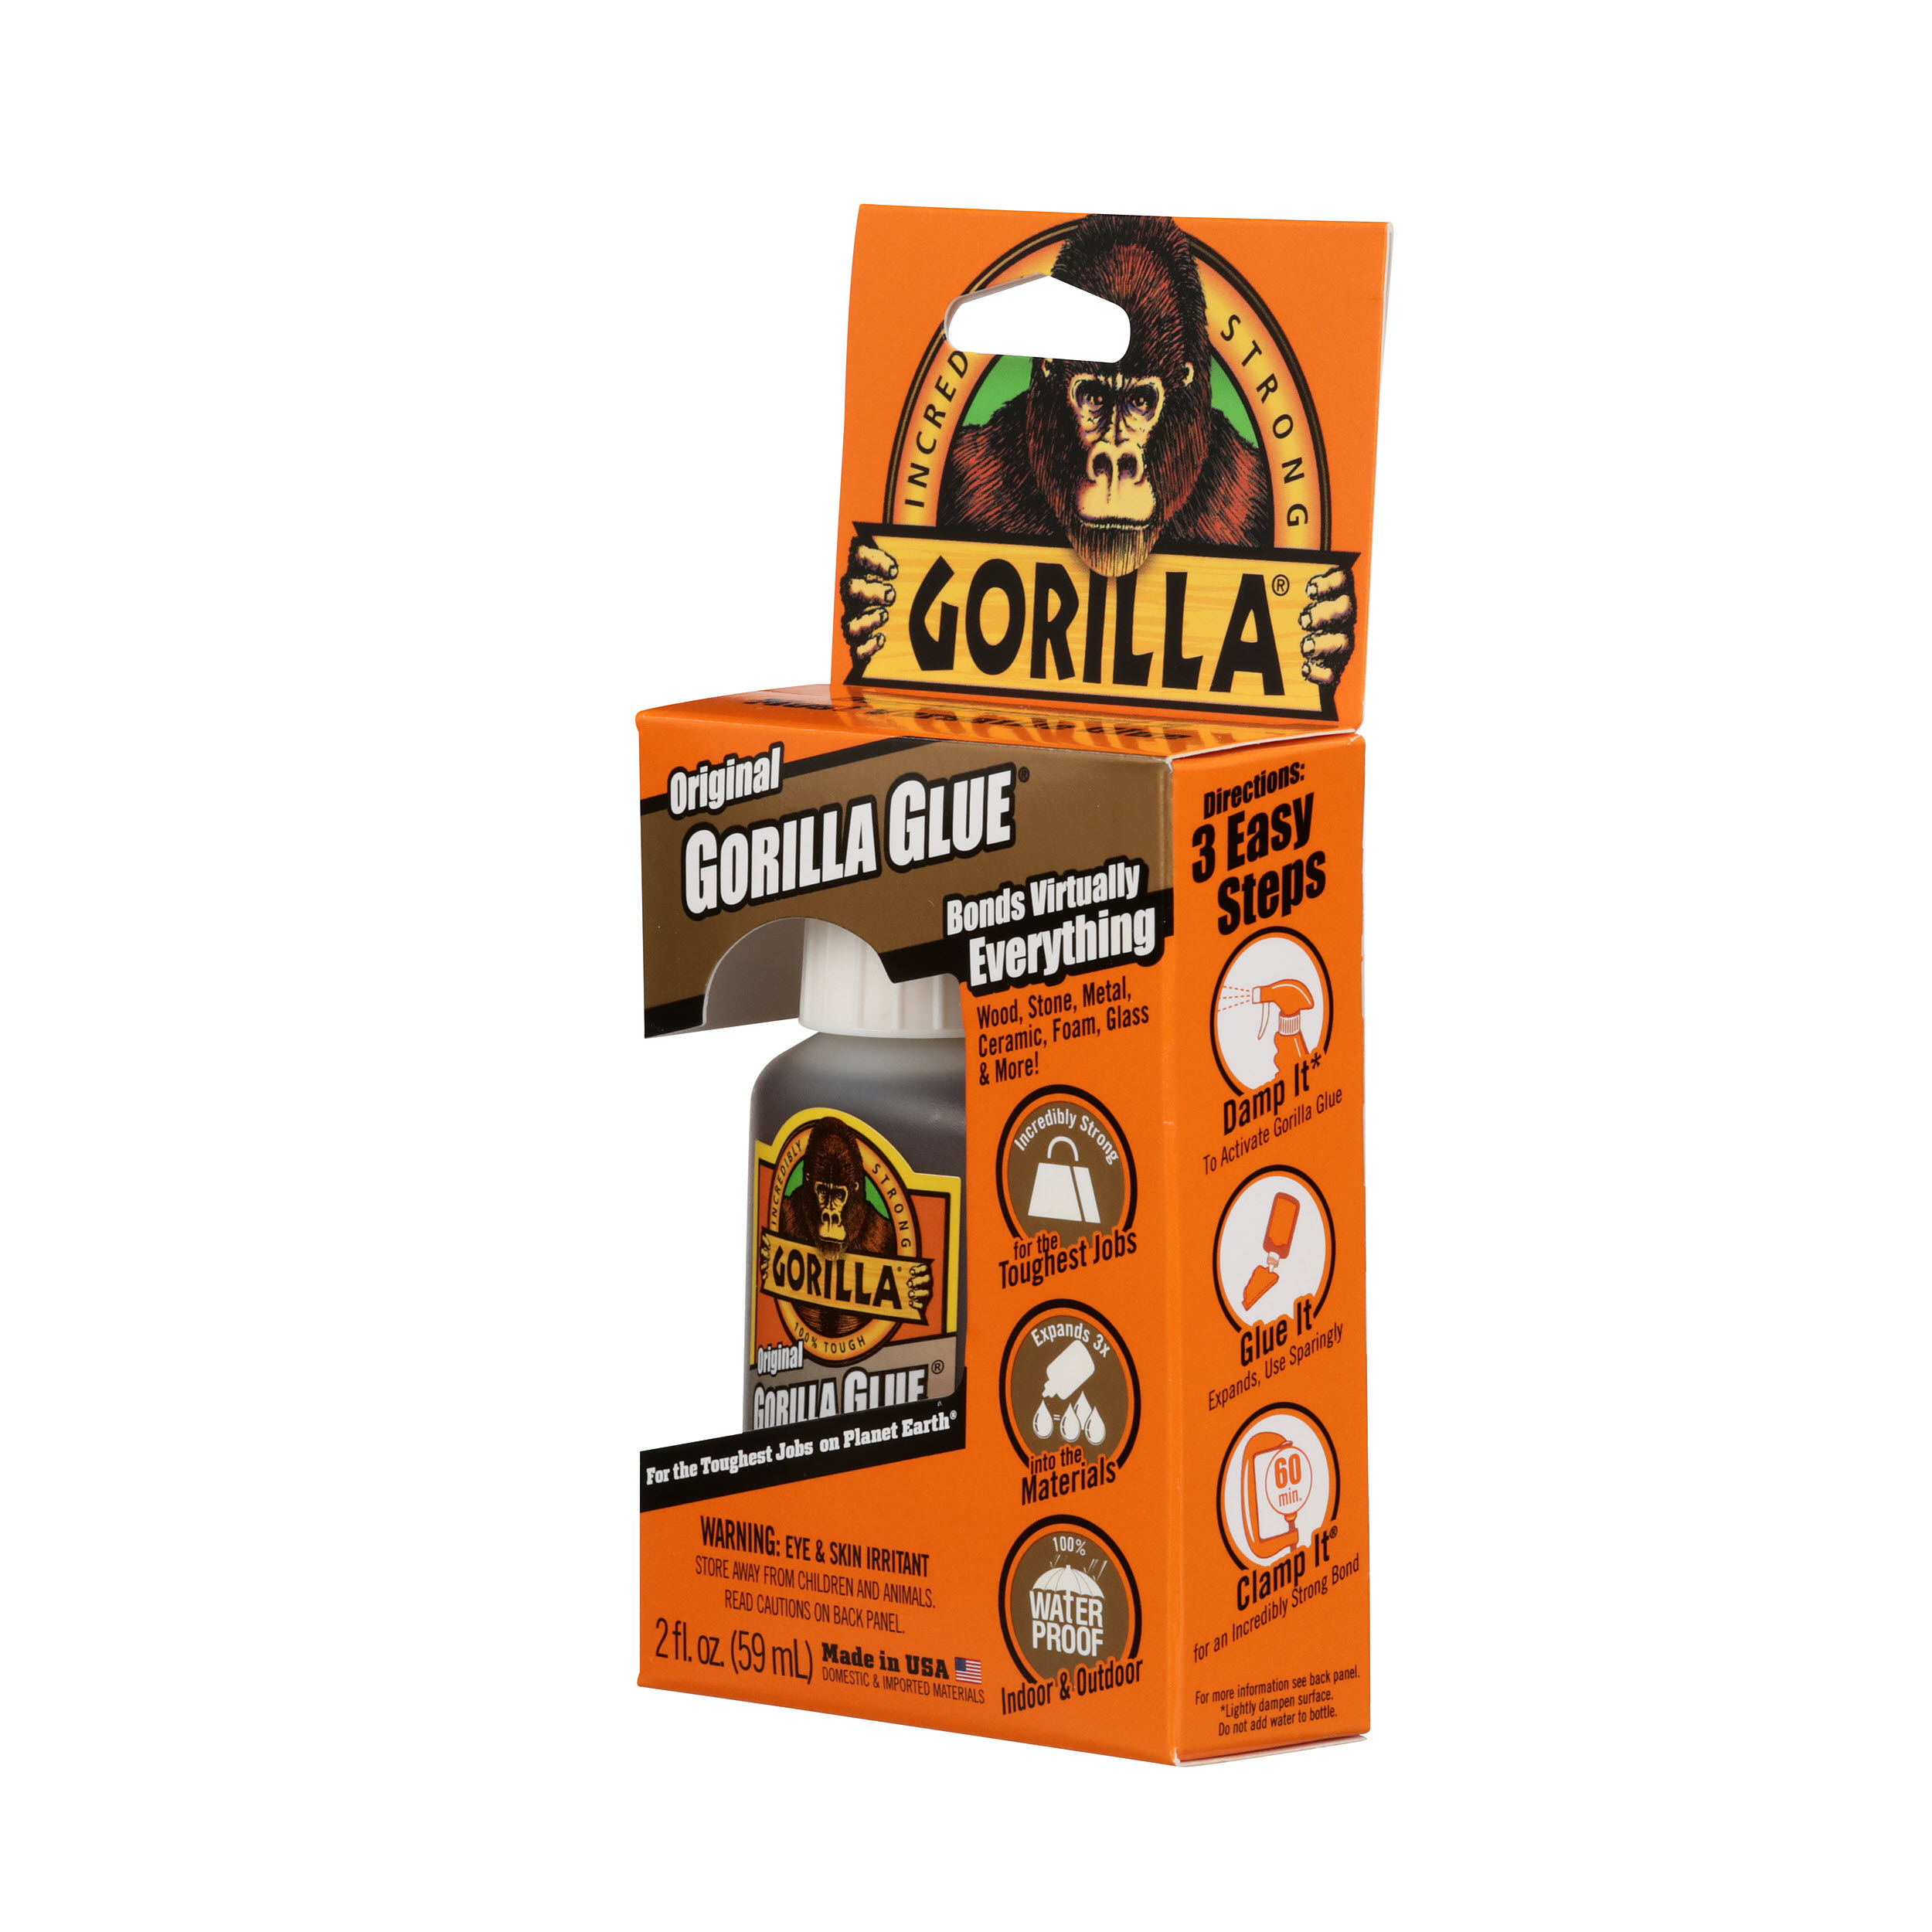 Gorilla 2 oz. Brown Original Glue 269 - The Home Depot